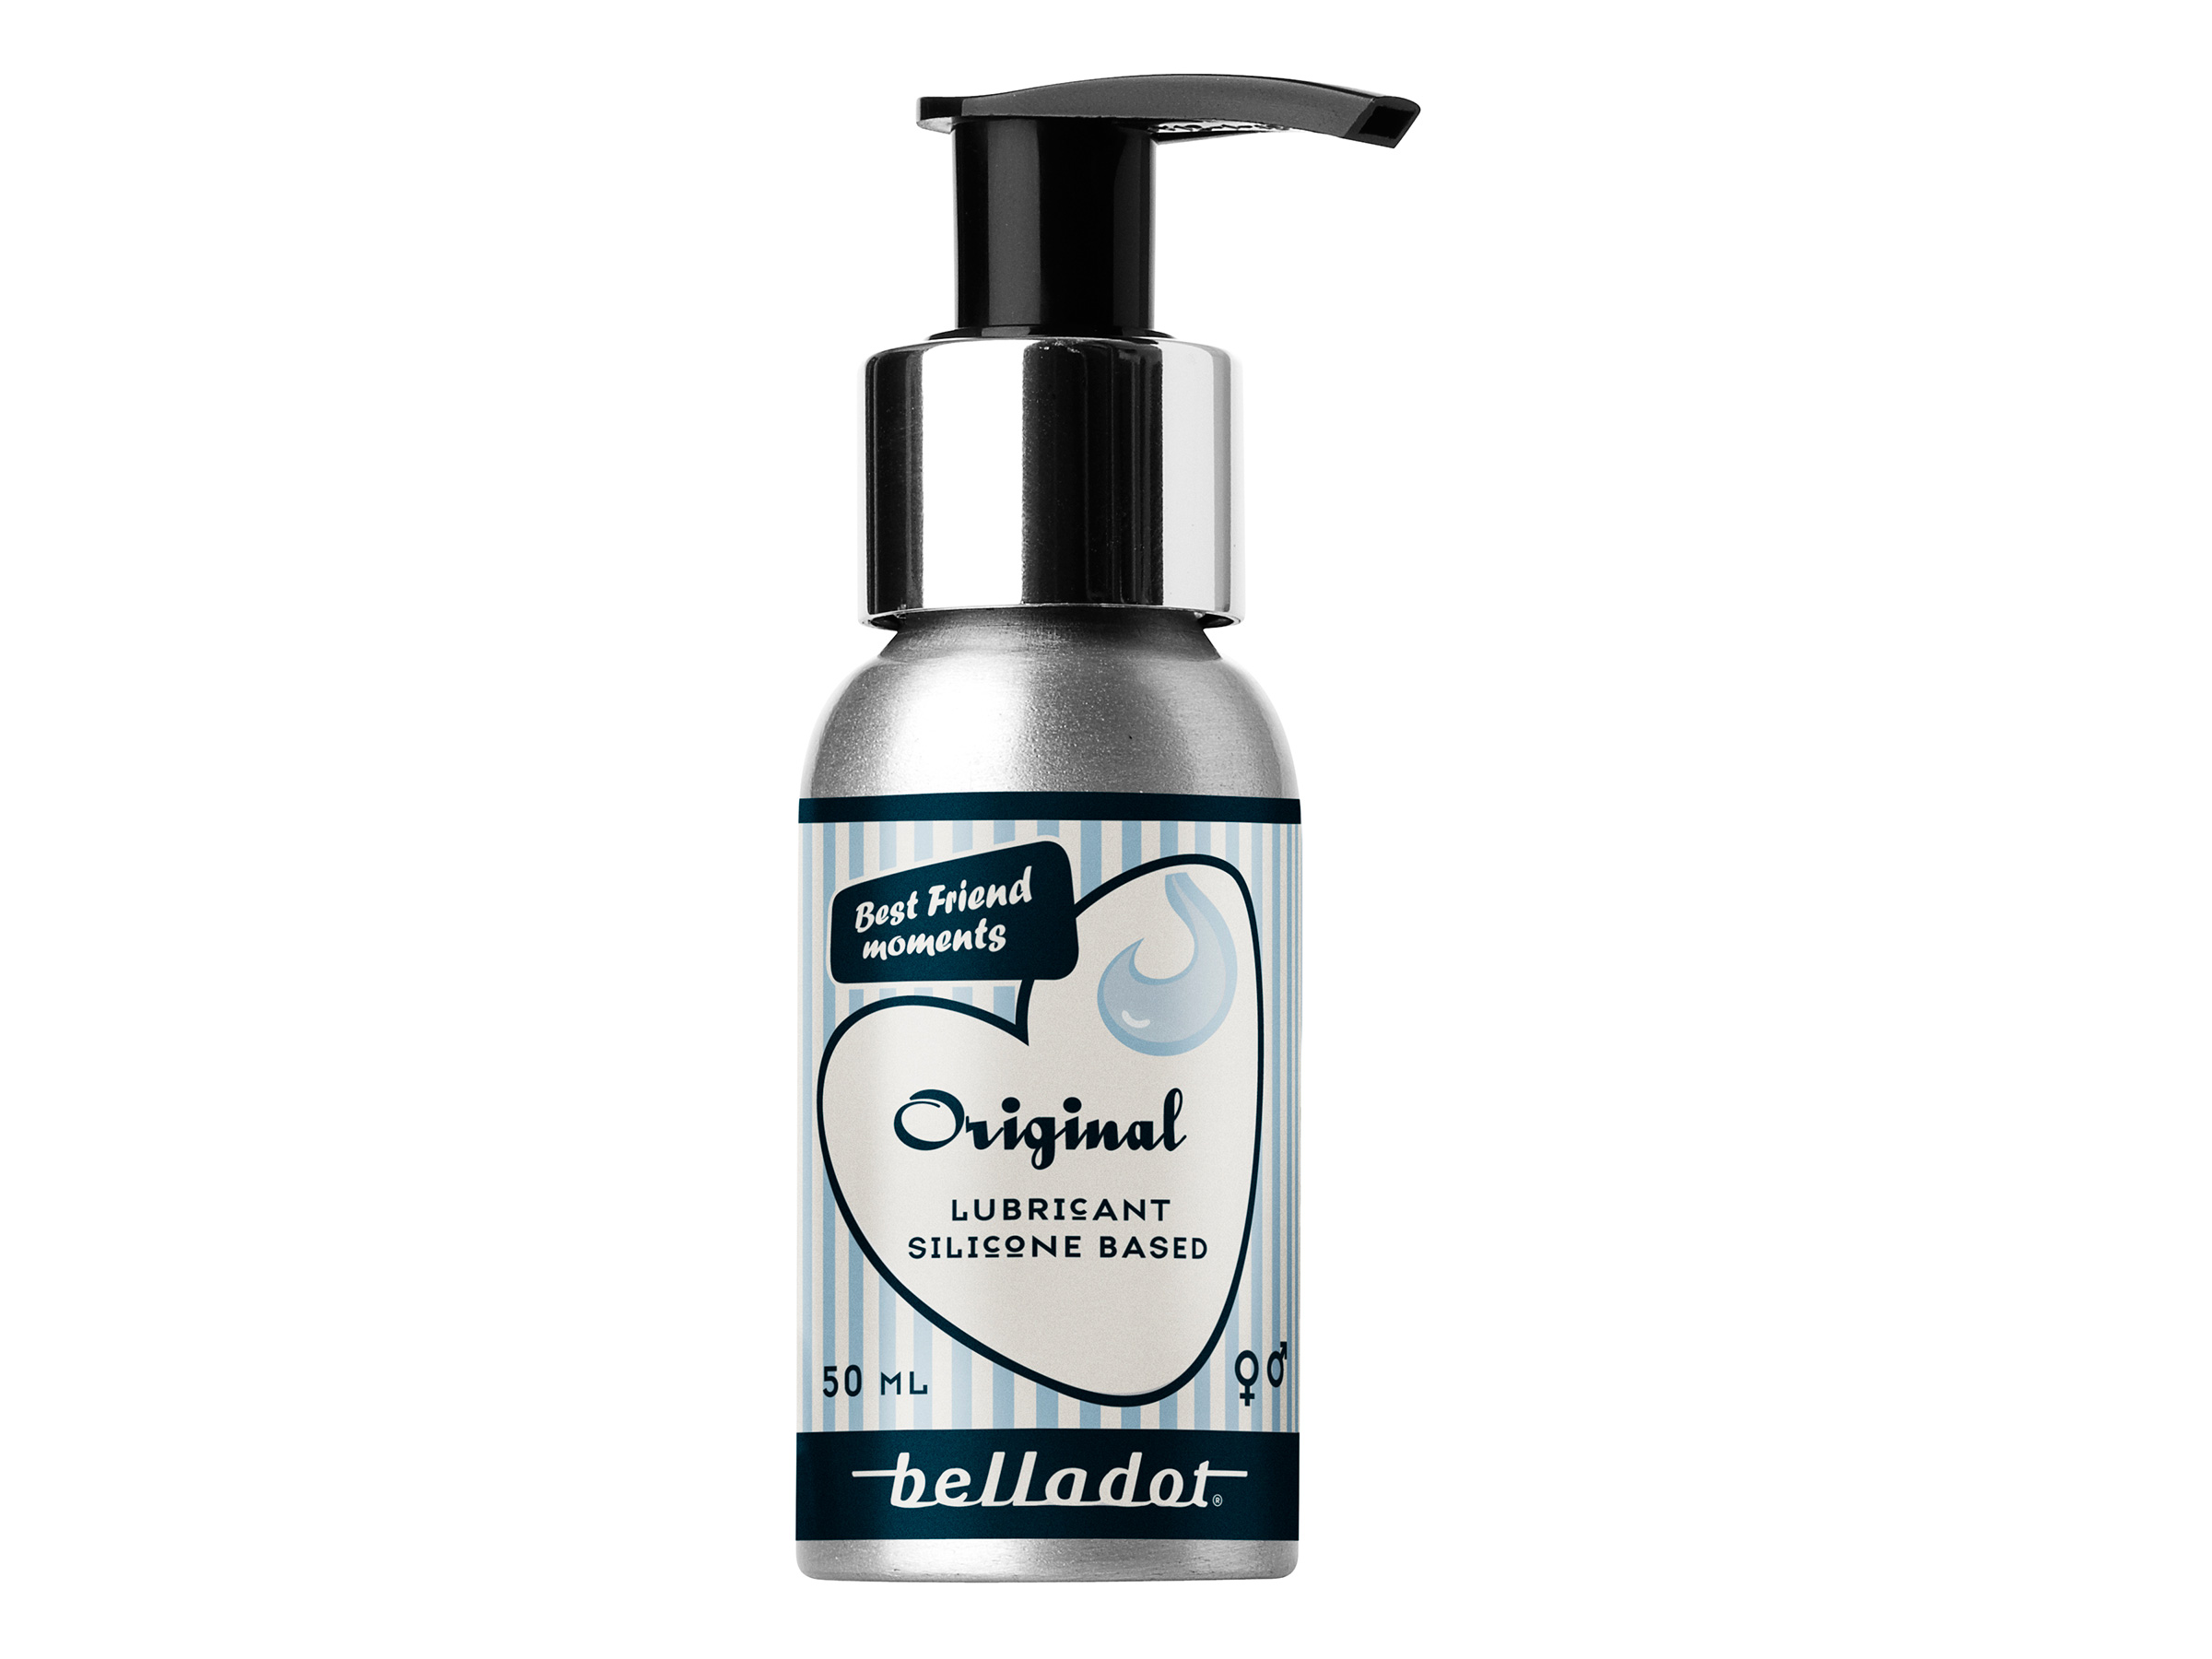 Belladot Belladot Original Lubricant Silicone Based, 50 ml